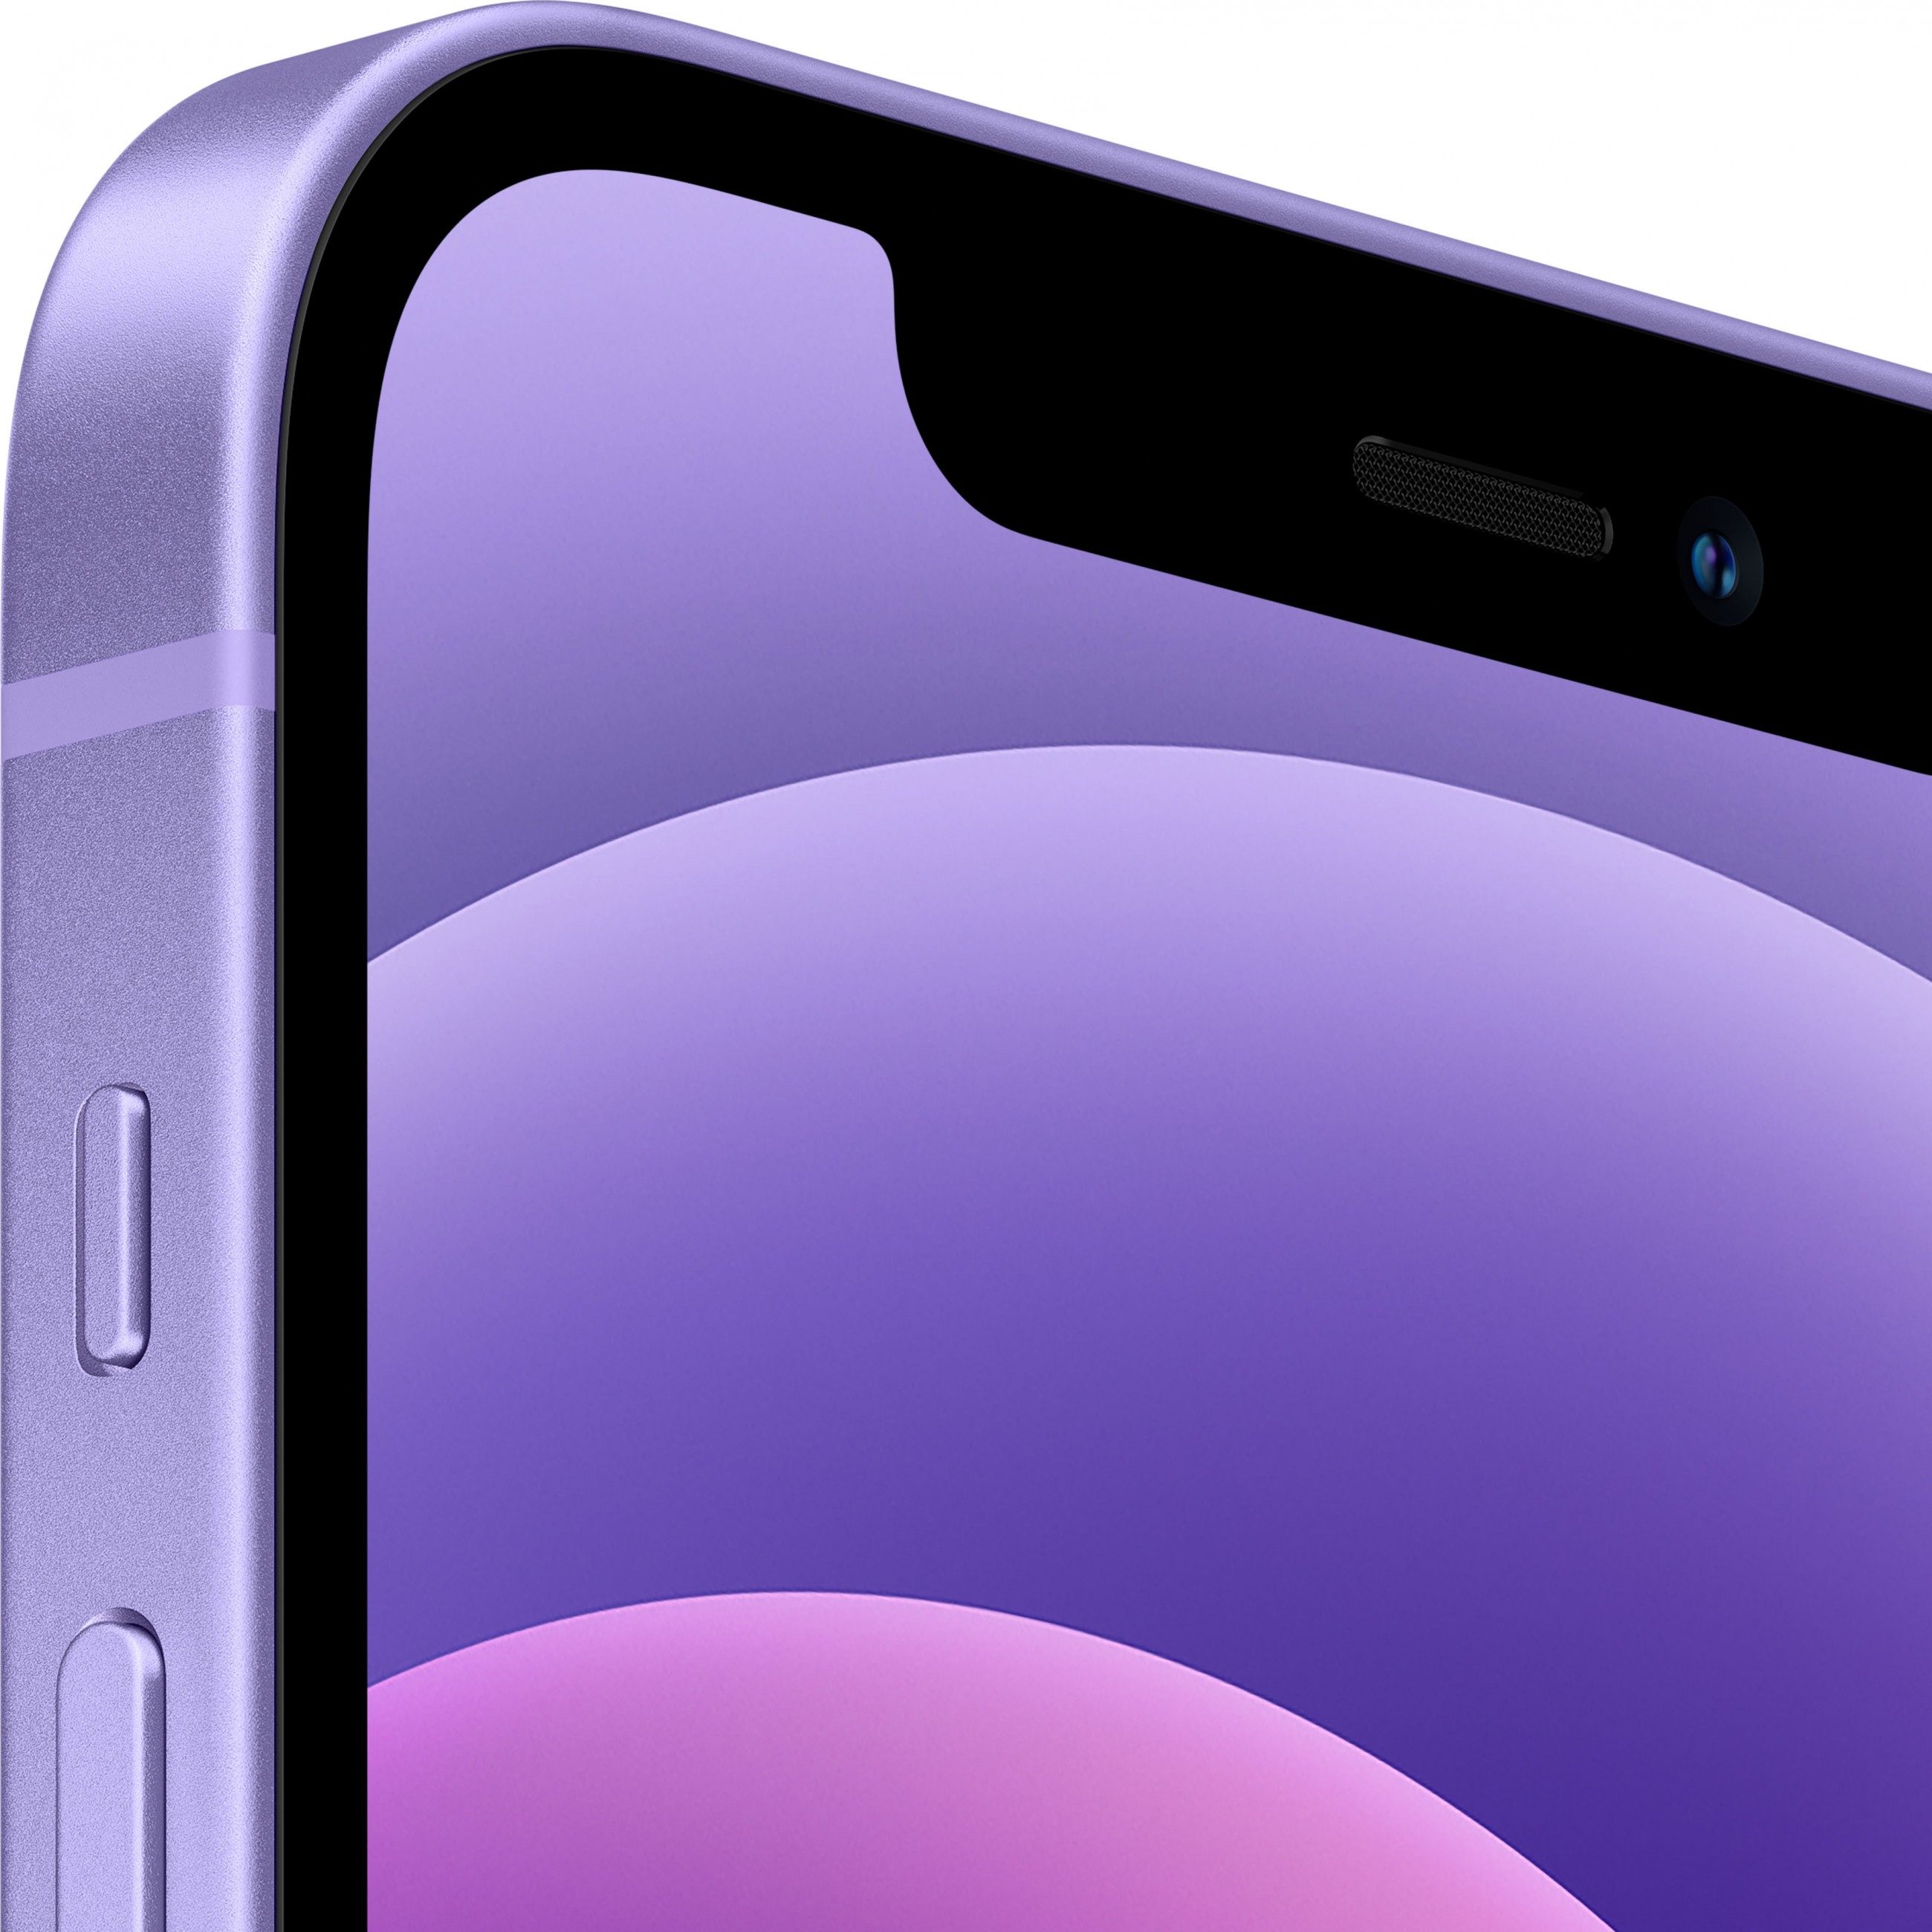 Apple iPhone 12 15,5 cm (6.1 Zoll) Dual-SIM iOS 14 5G 64 GB Violett